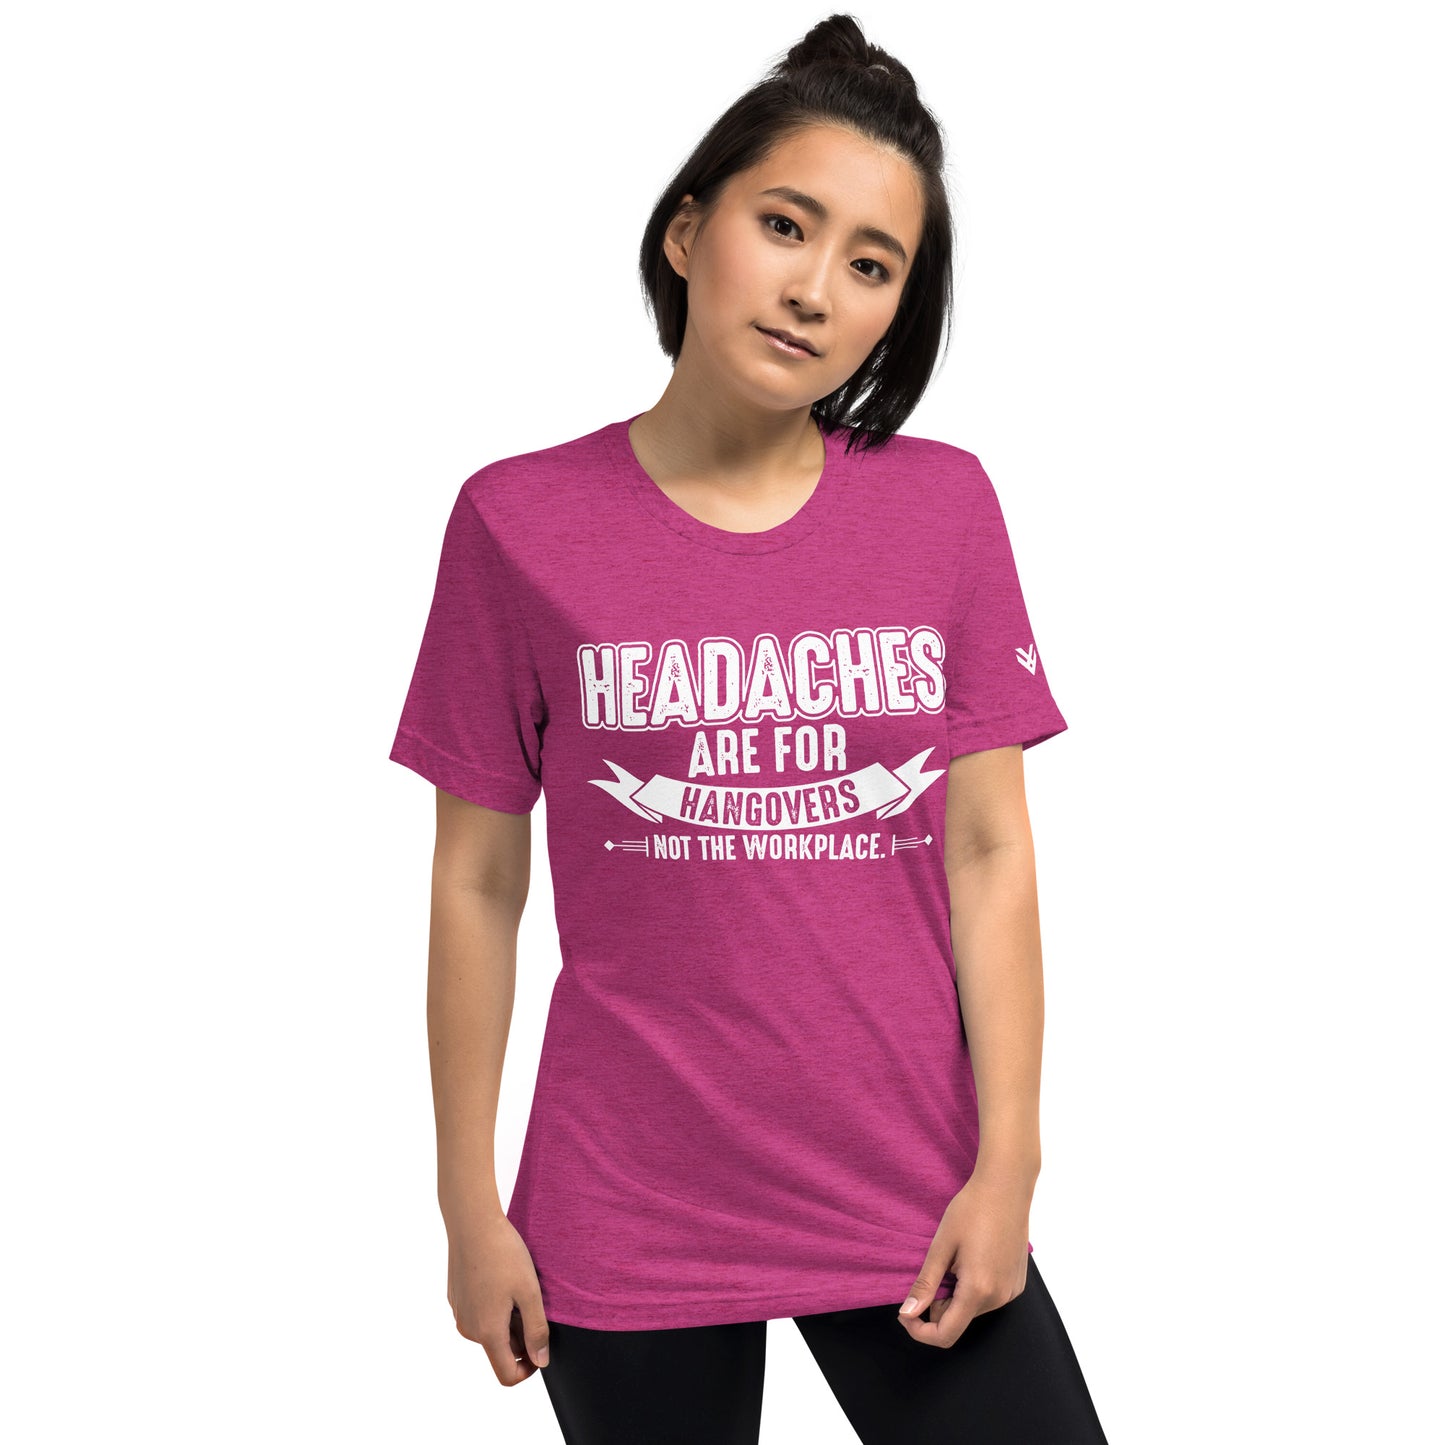 Short Sleeve Headaches Tee